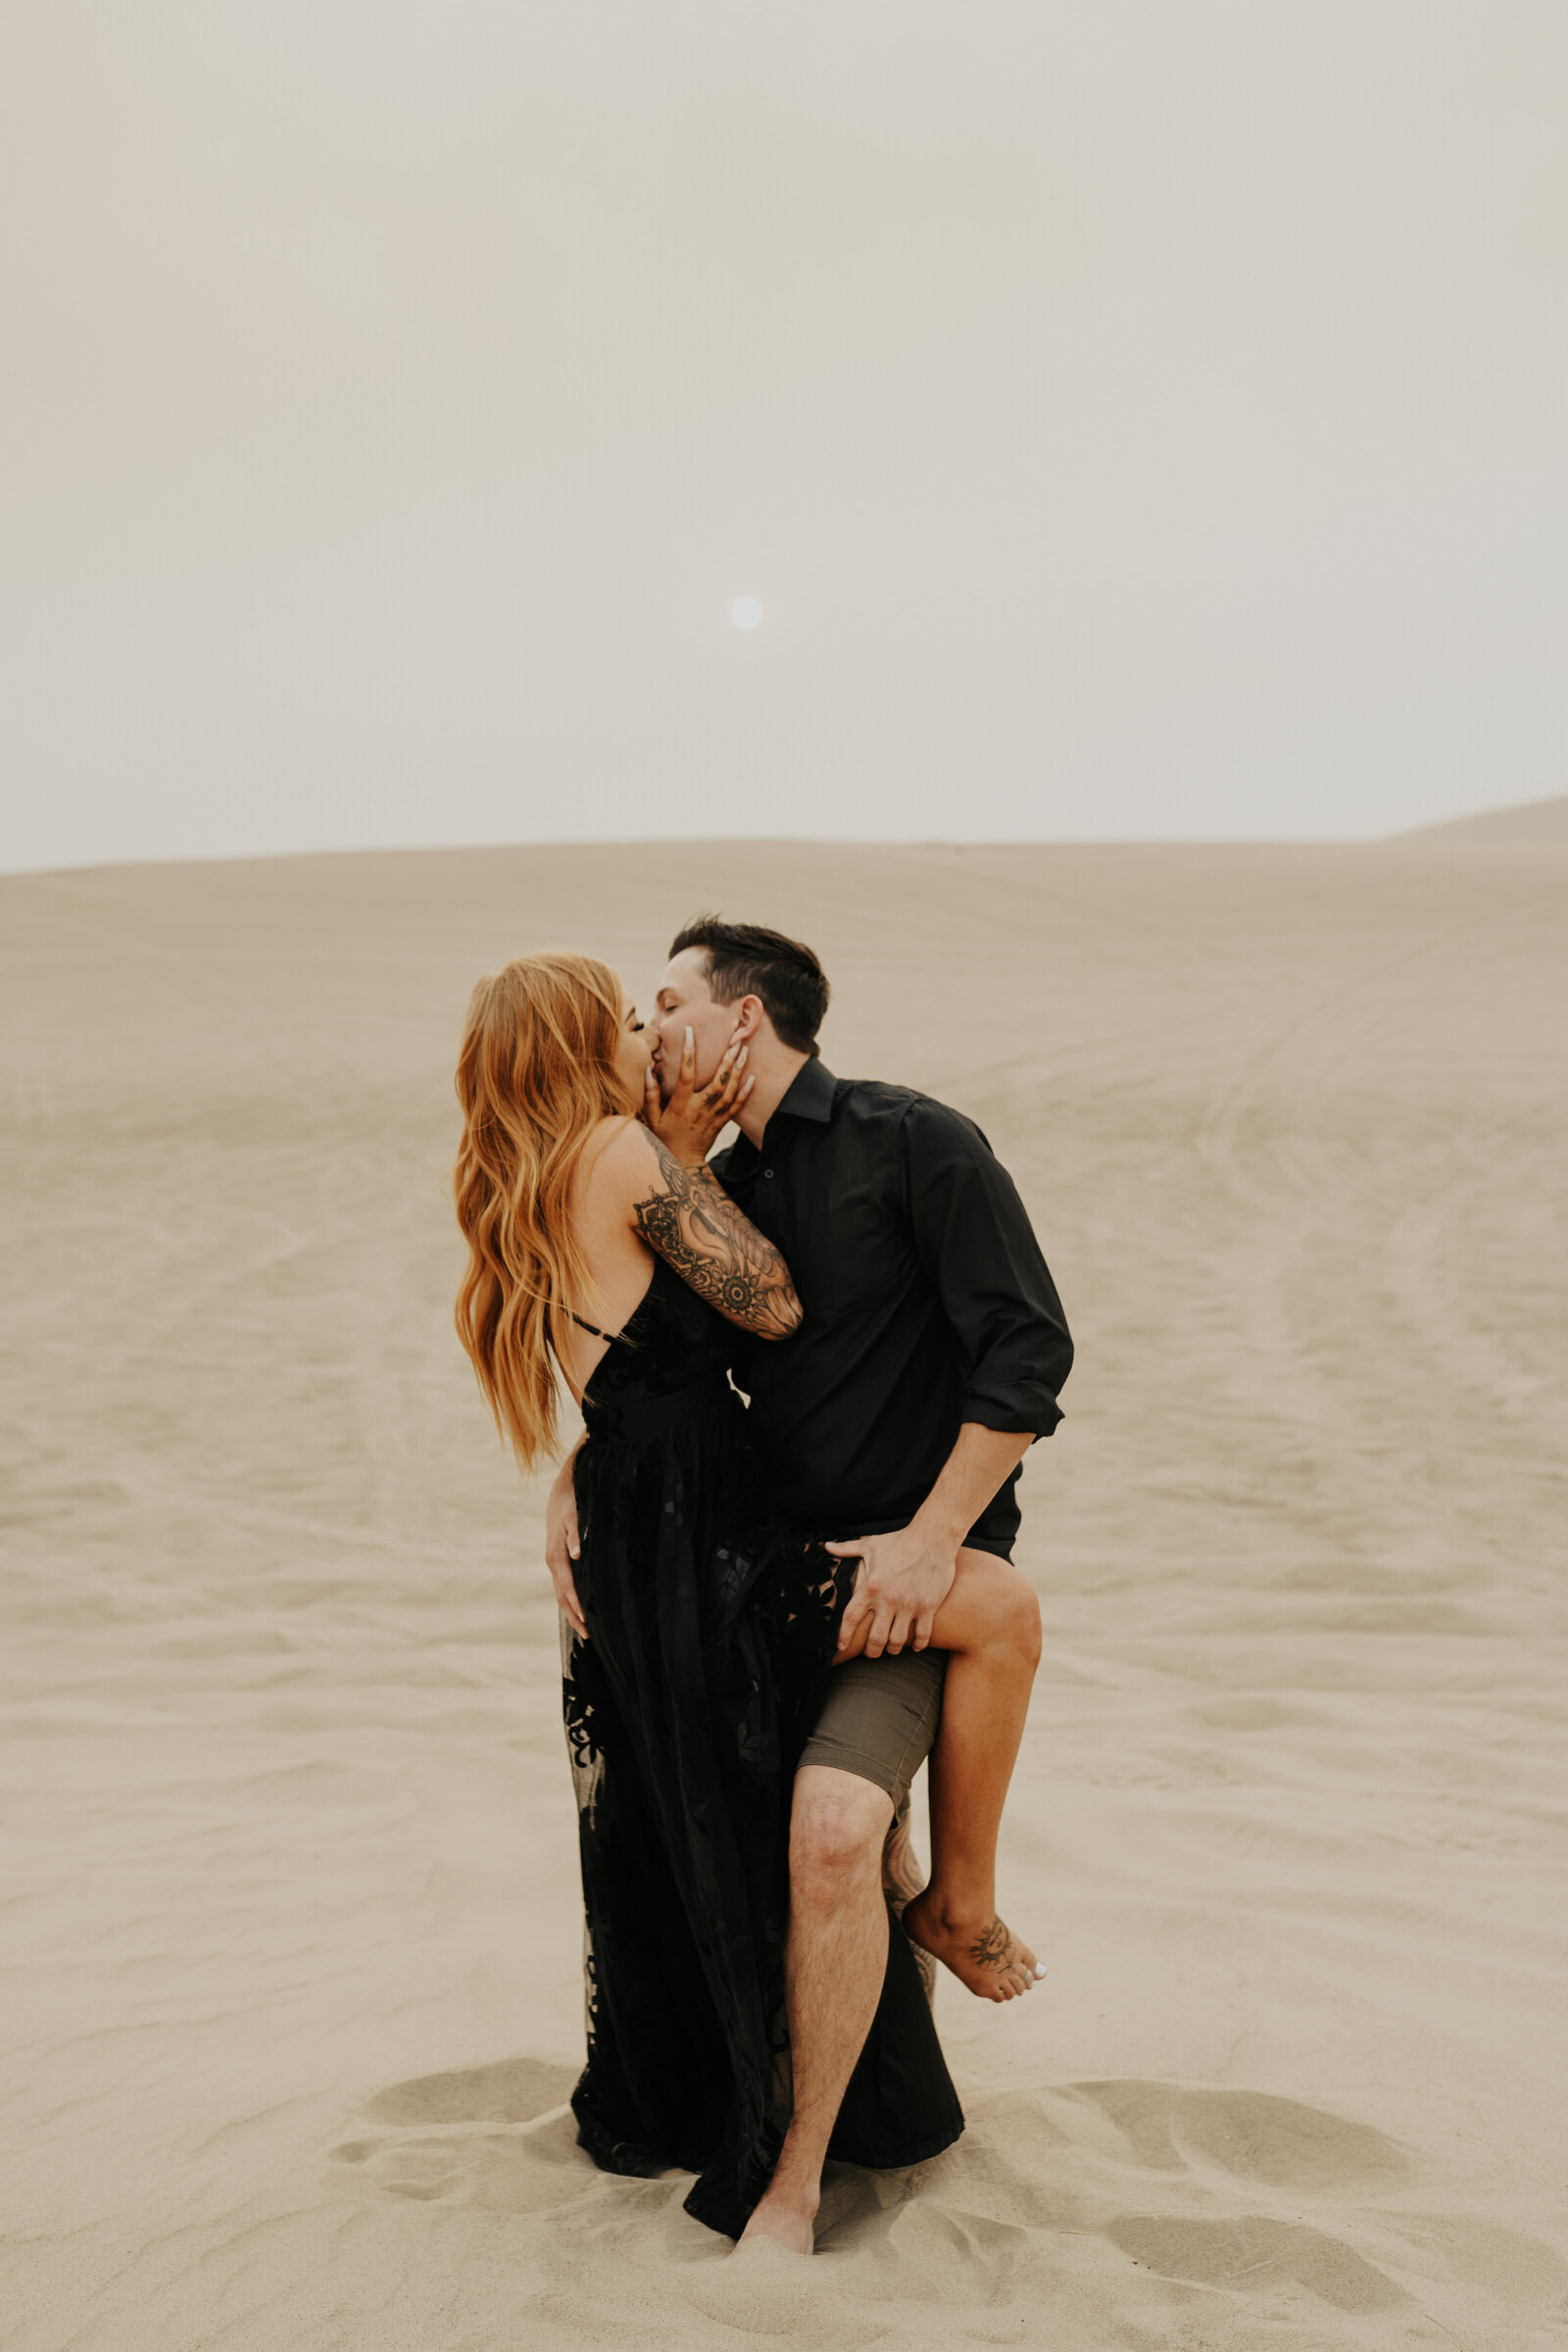 Sand Dunes Couples Photos - Raquel King Photography29